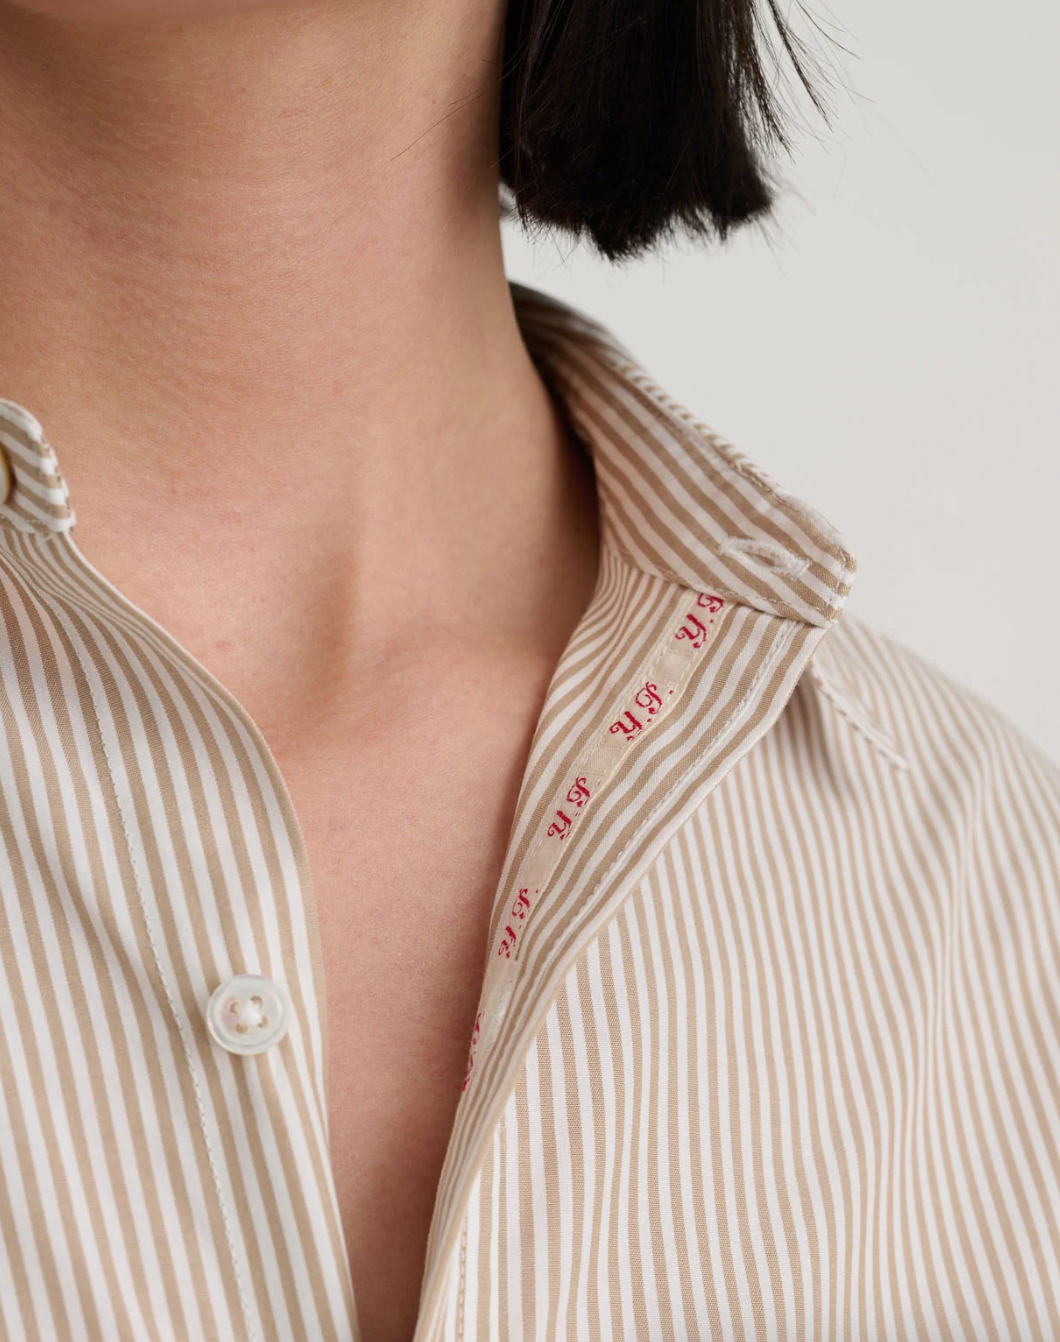 Product Image for Nolan Shirt, Tan Yarn Dye Stripe